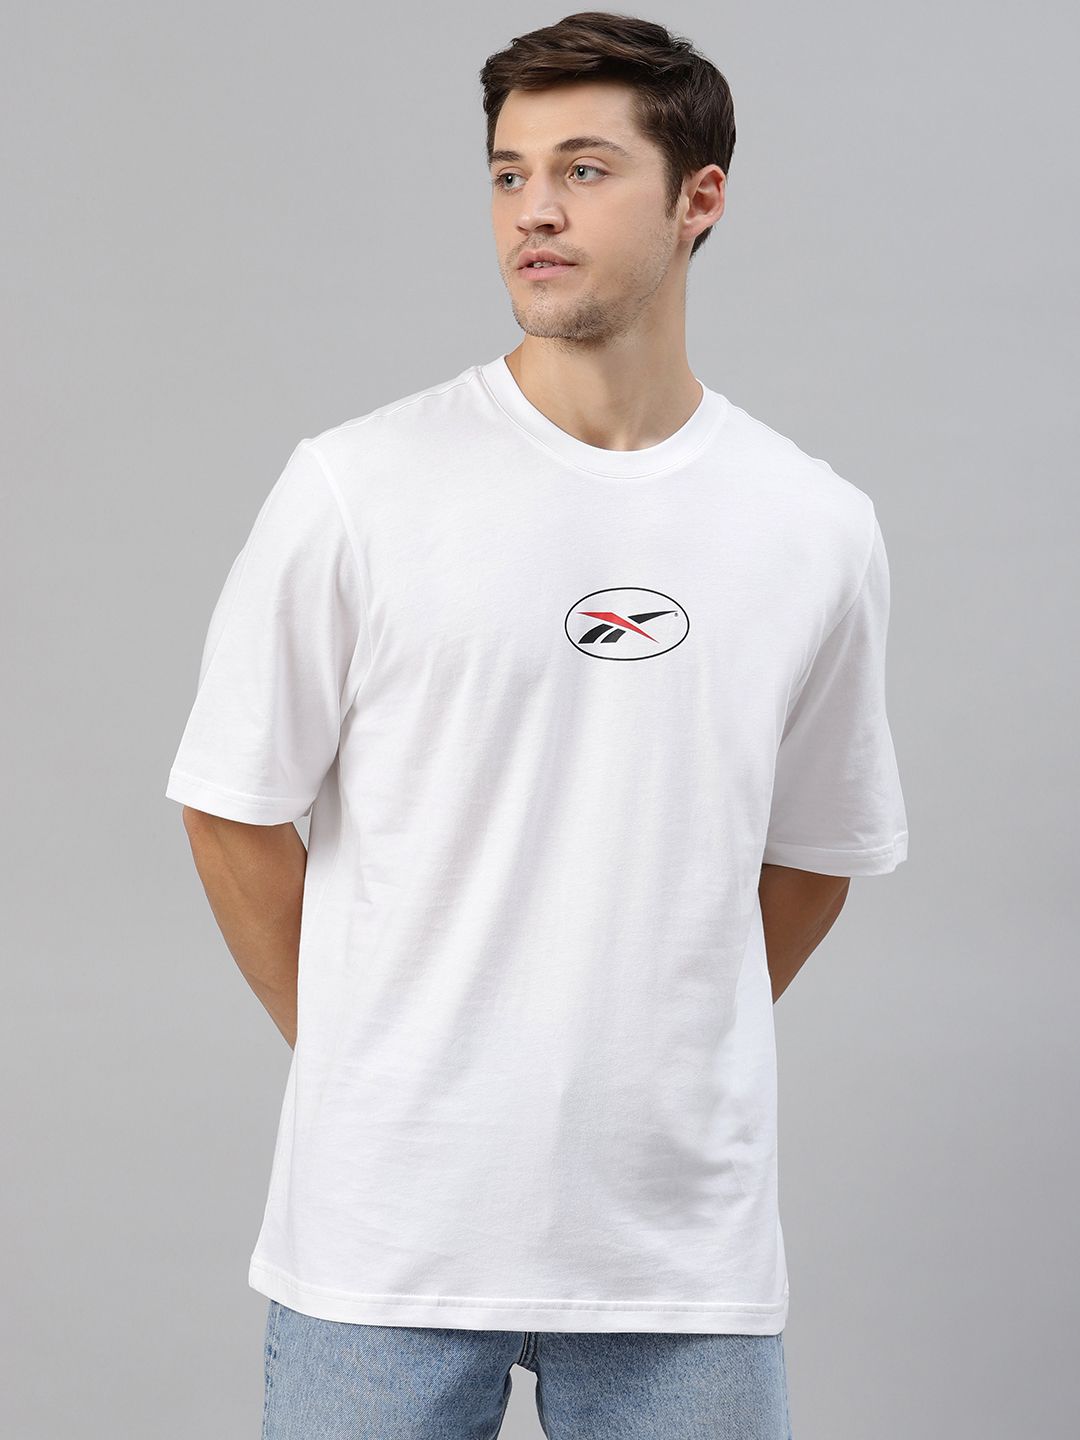 Reebok Classic Unisex White Glitch Brand Logo Printed Back Round Neck T-shirt Price in India